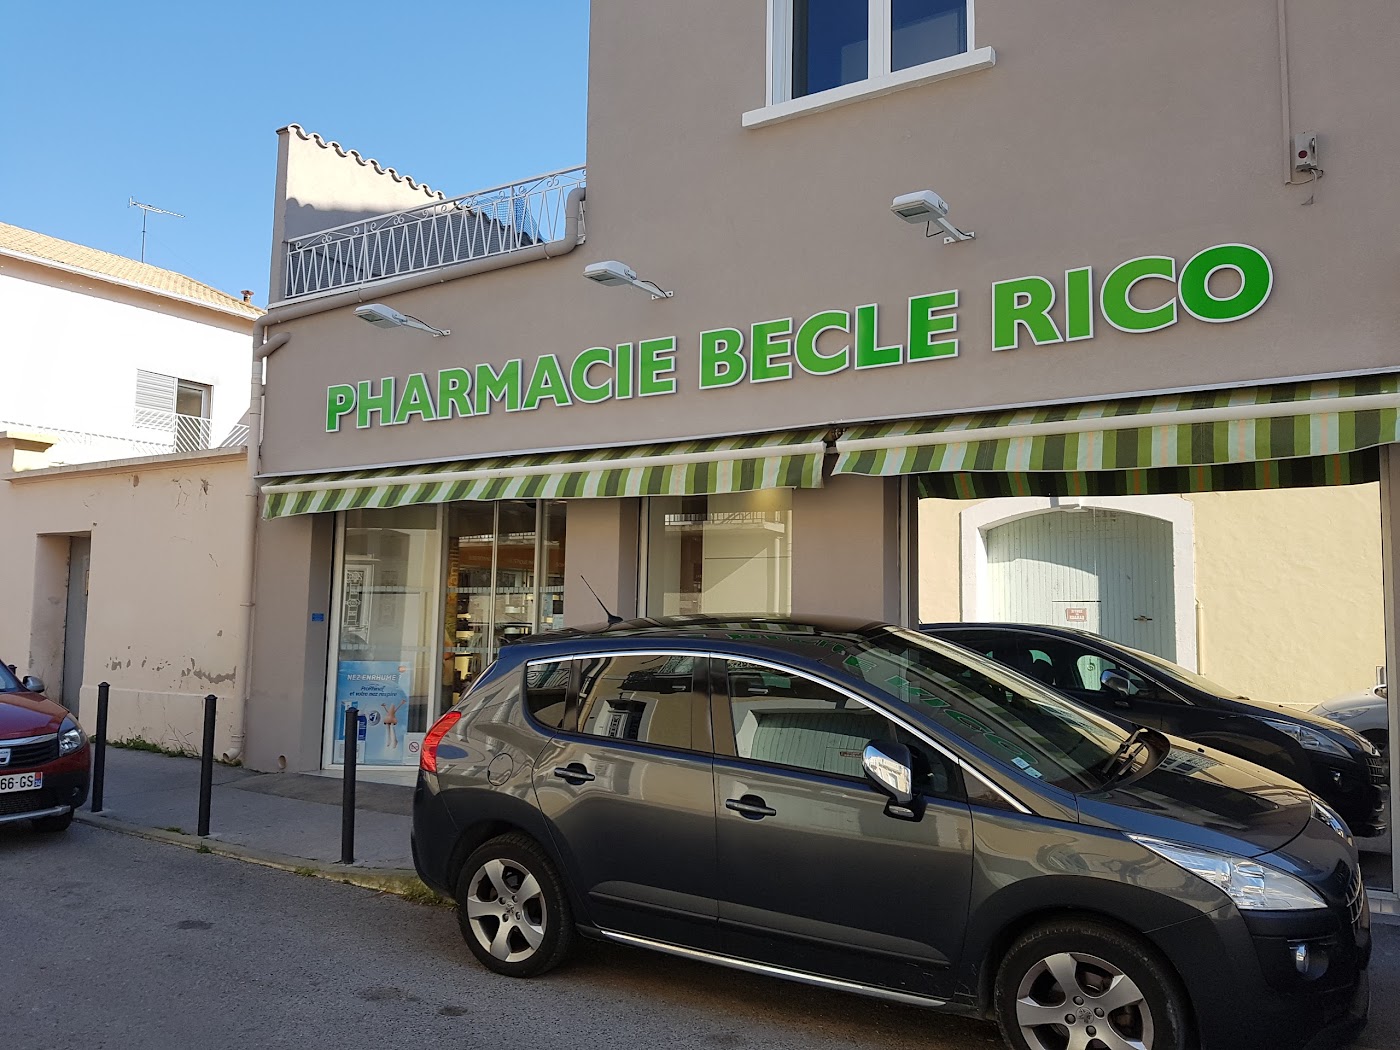 Pharmacie Becle Rico